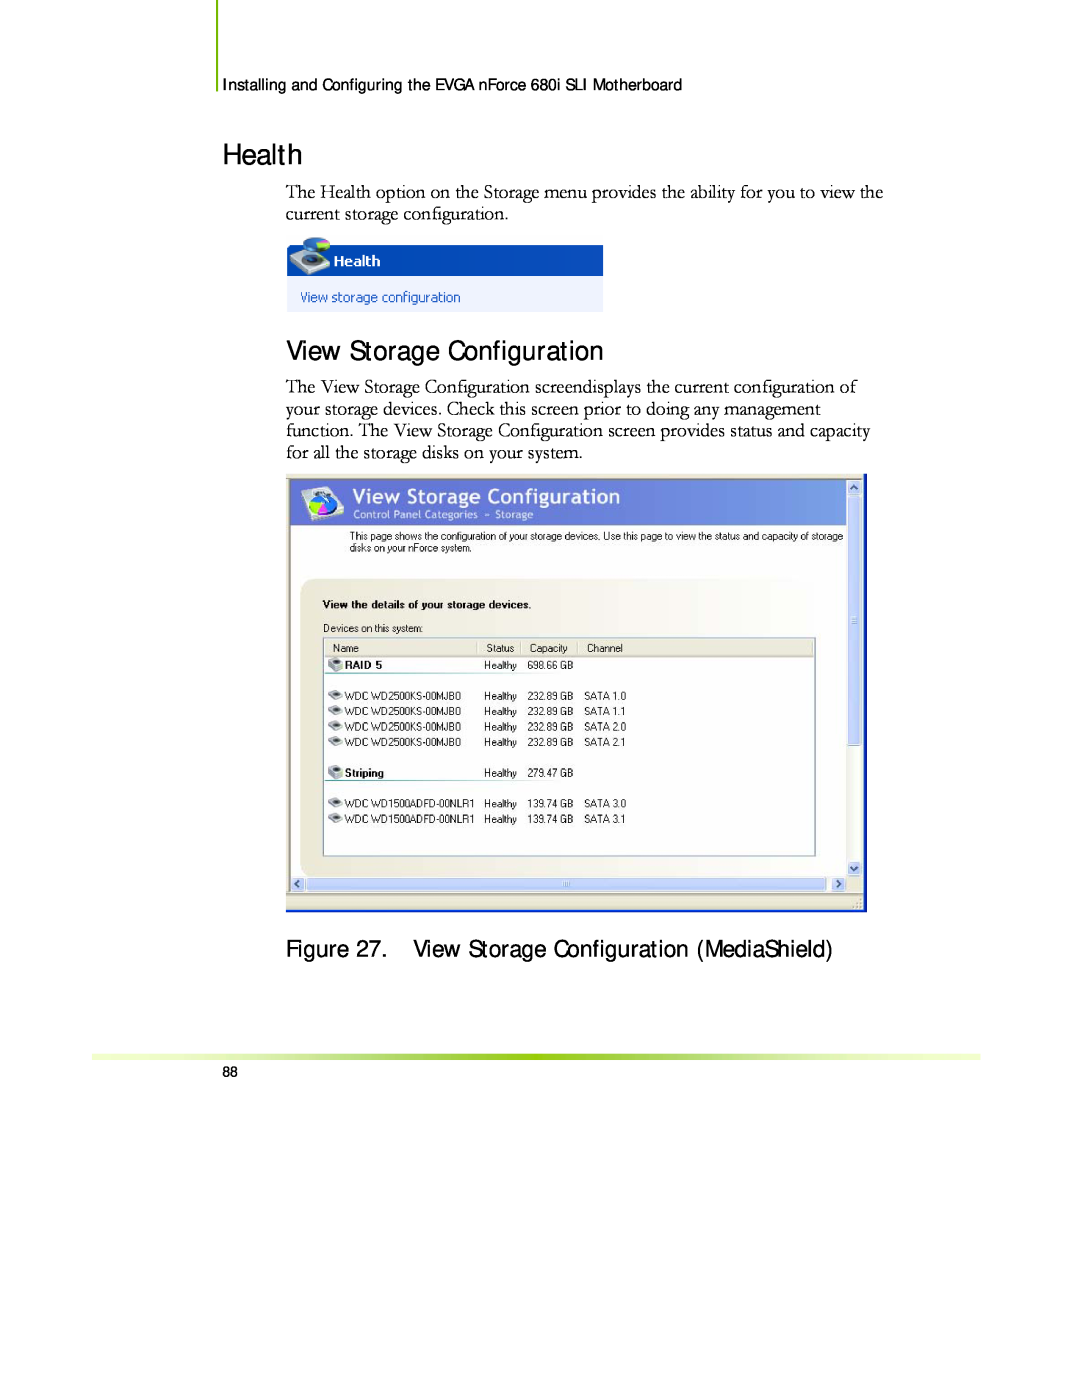 EVGA 122-CK-NF68-XX manual Health, View Storage Configuration MediaShield 